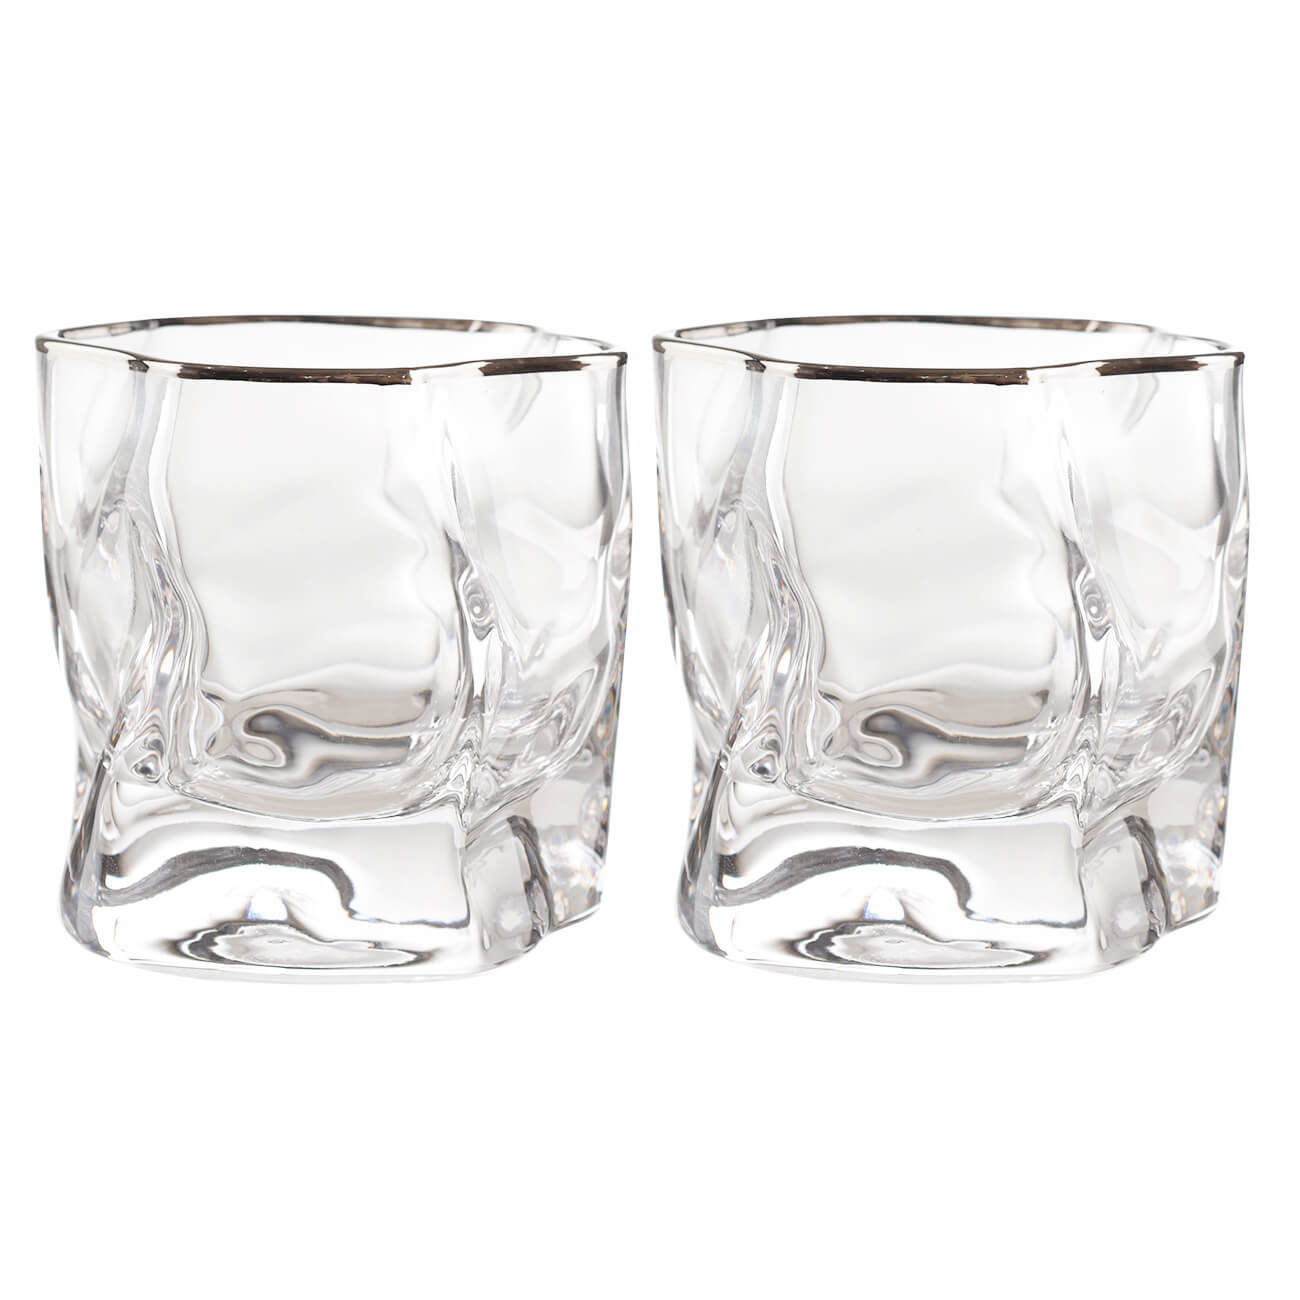 Стакан для виски, 245 мл, 2 шт, стекло, с серебристым кантом, Slalom silver стакан для виски большого успеха 250 мл